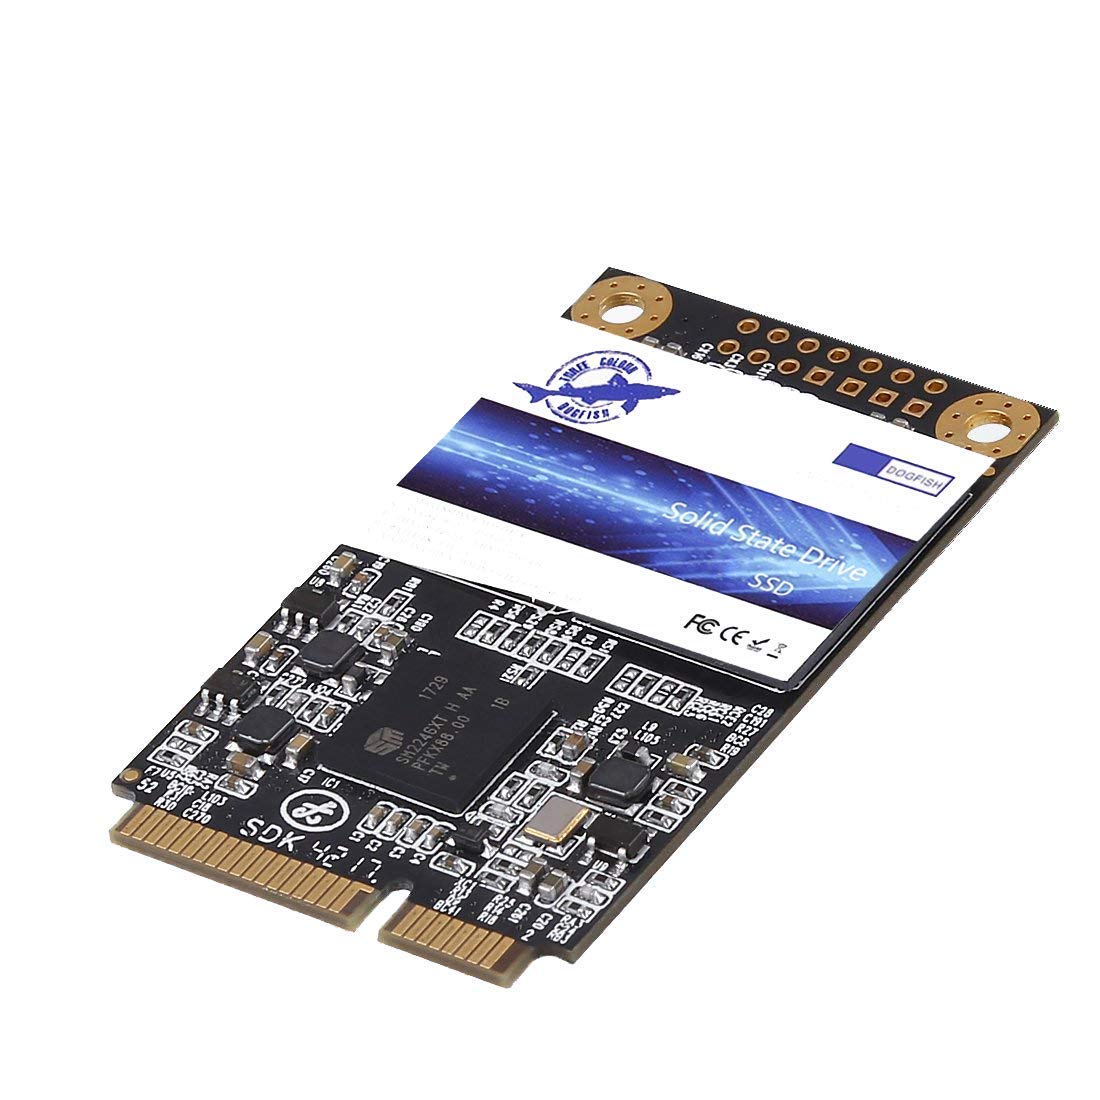 Dogfish Msata 256GB 内蔵型 ミニ ハードディスク SSD Disk 256GB MSATA